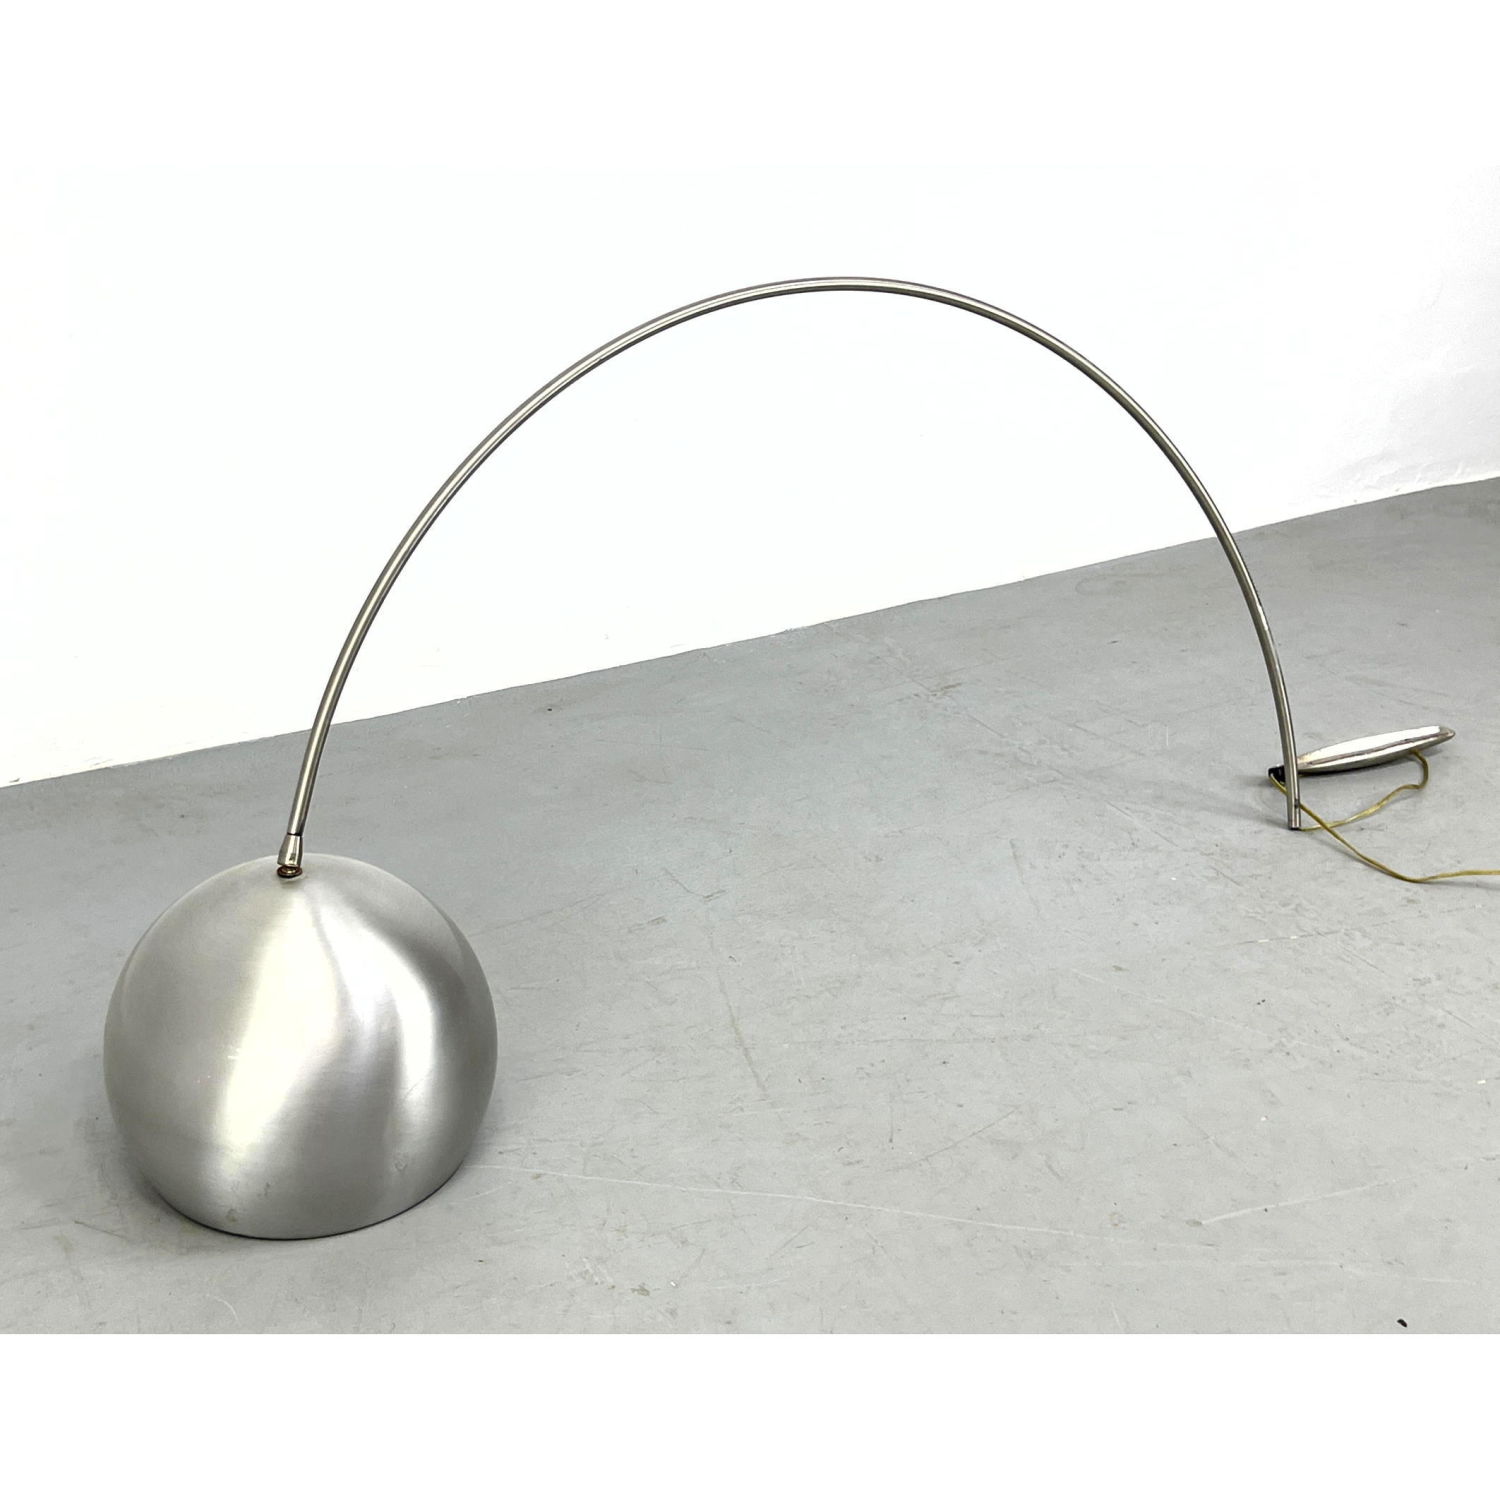 Laurel wall mounted lamp spun aluminum